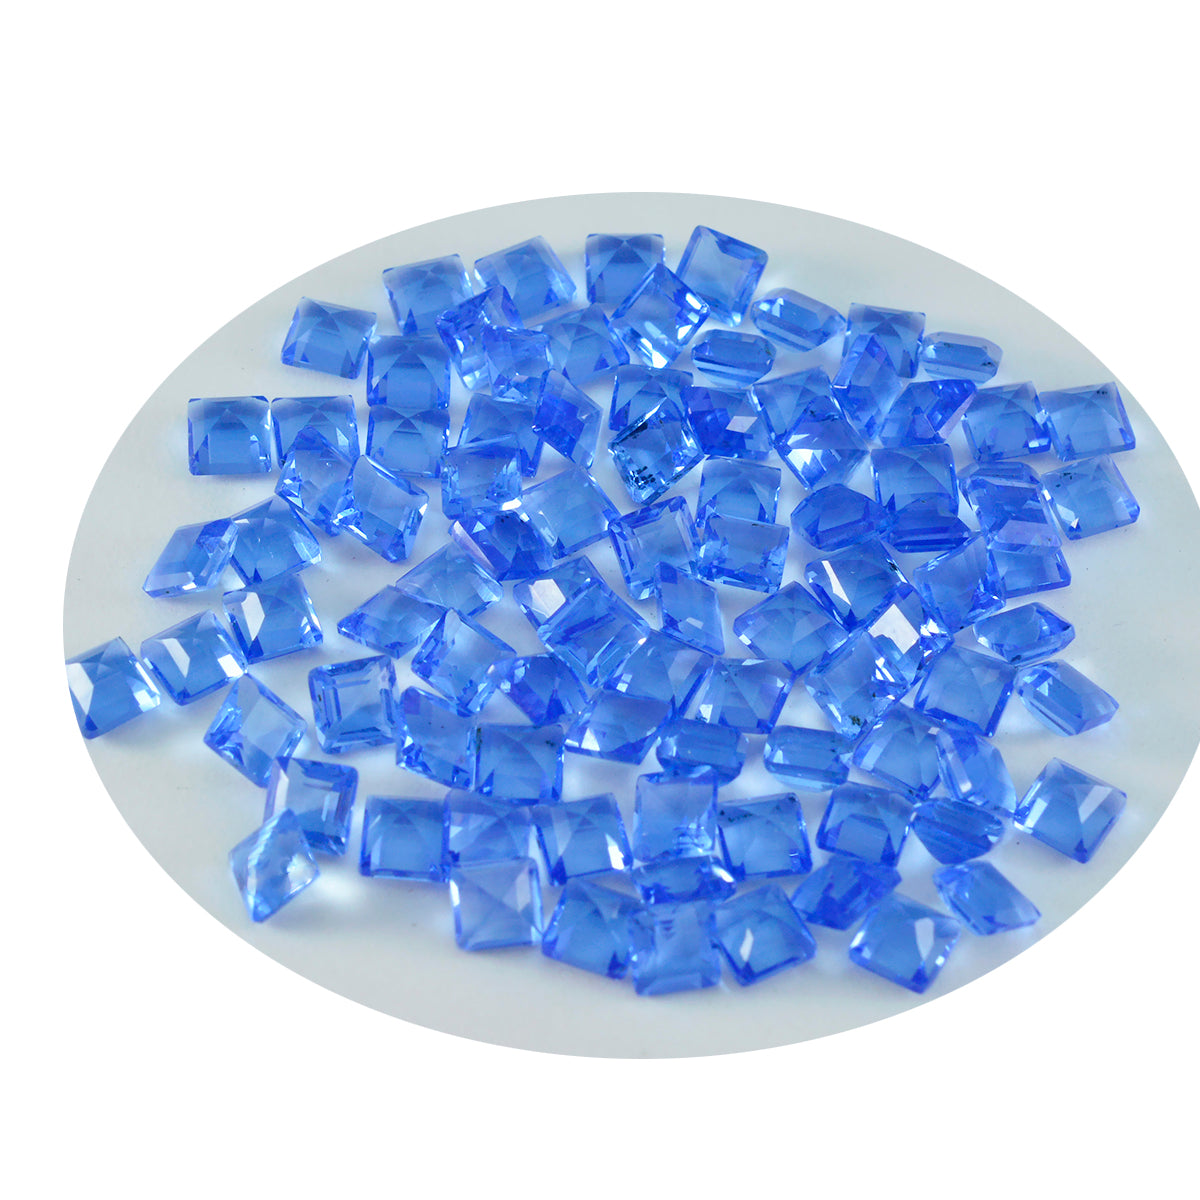 Riyogems 1 pieza zafiro azul CZ facetado 4x4 mm forma cuadrada piedra suelta de calidad A1